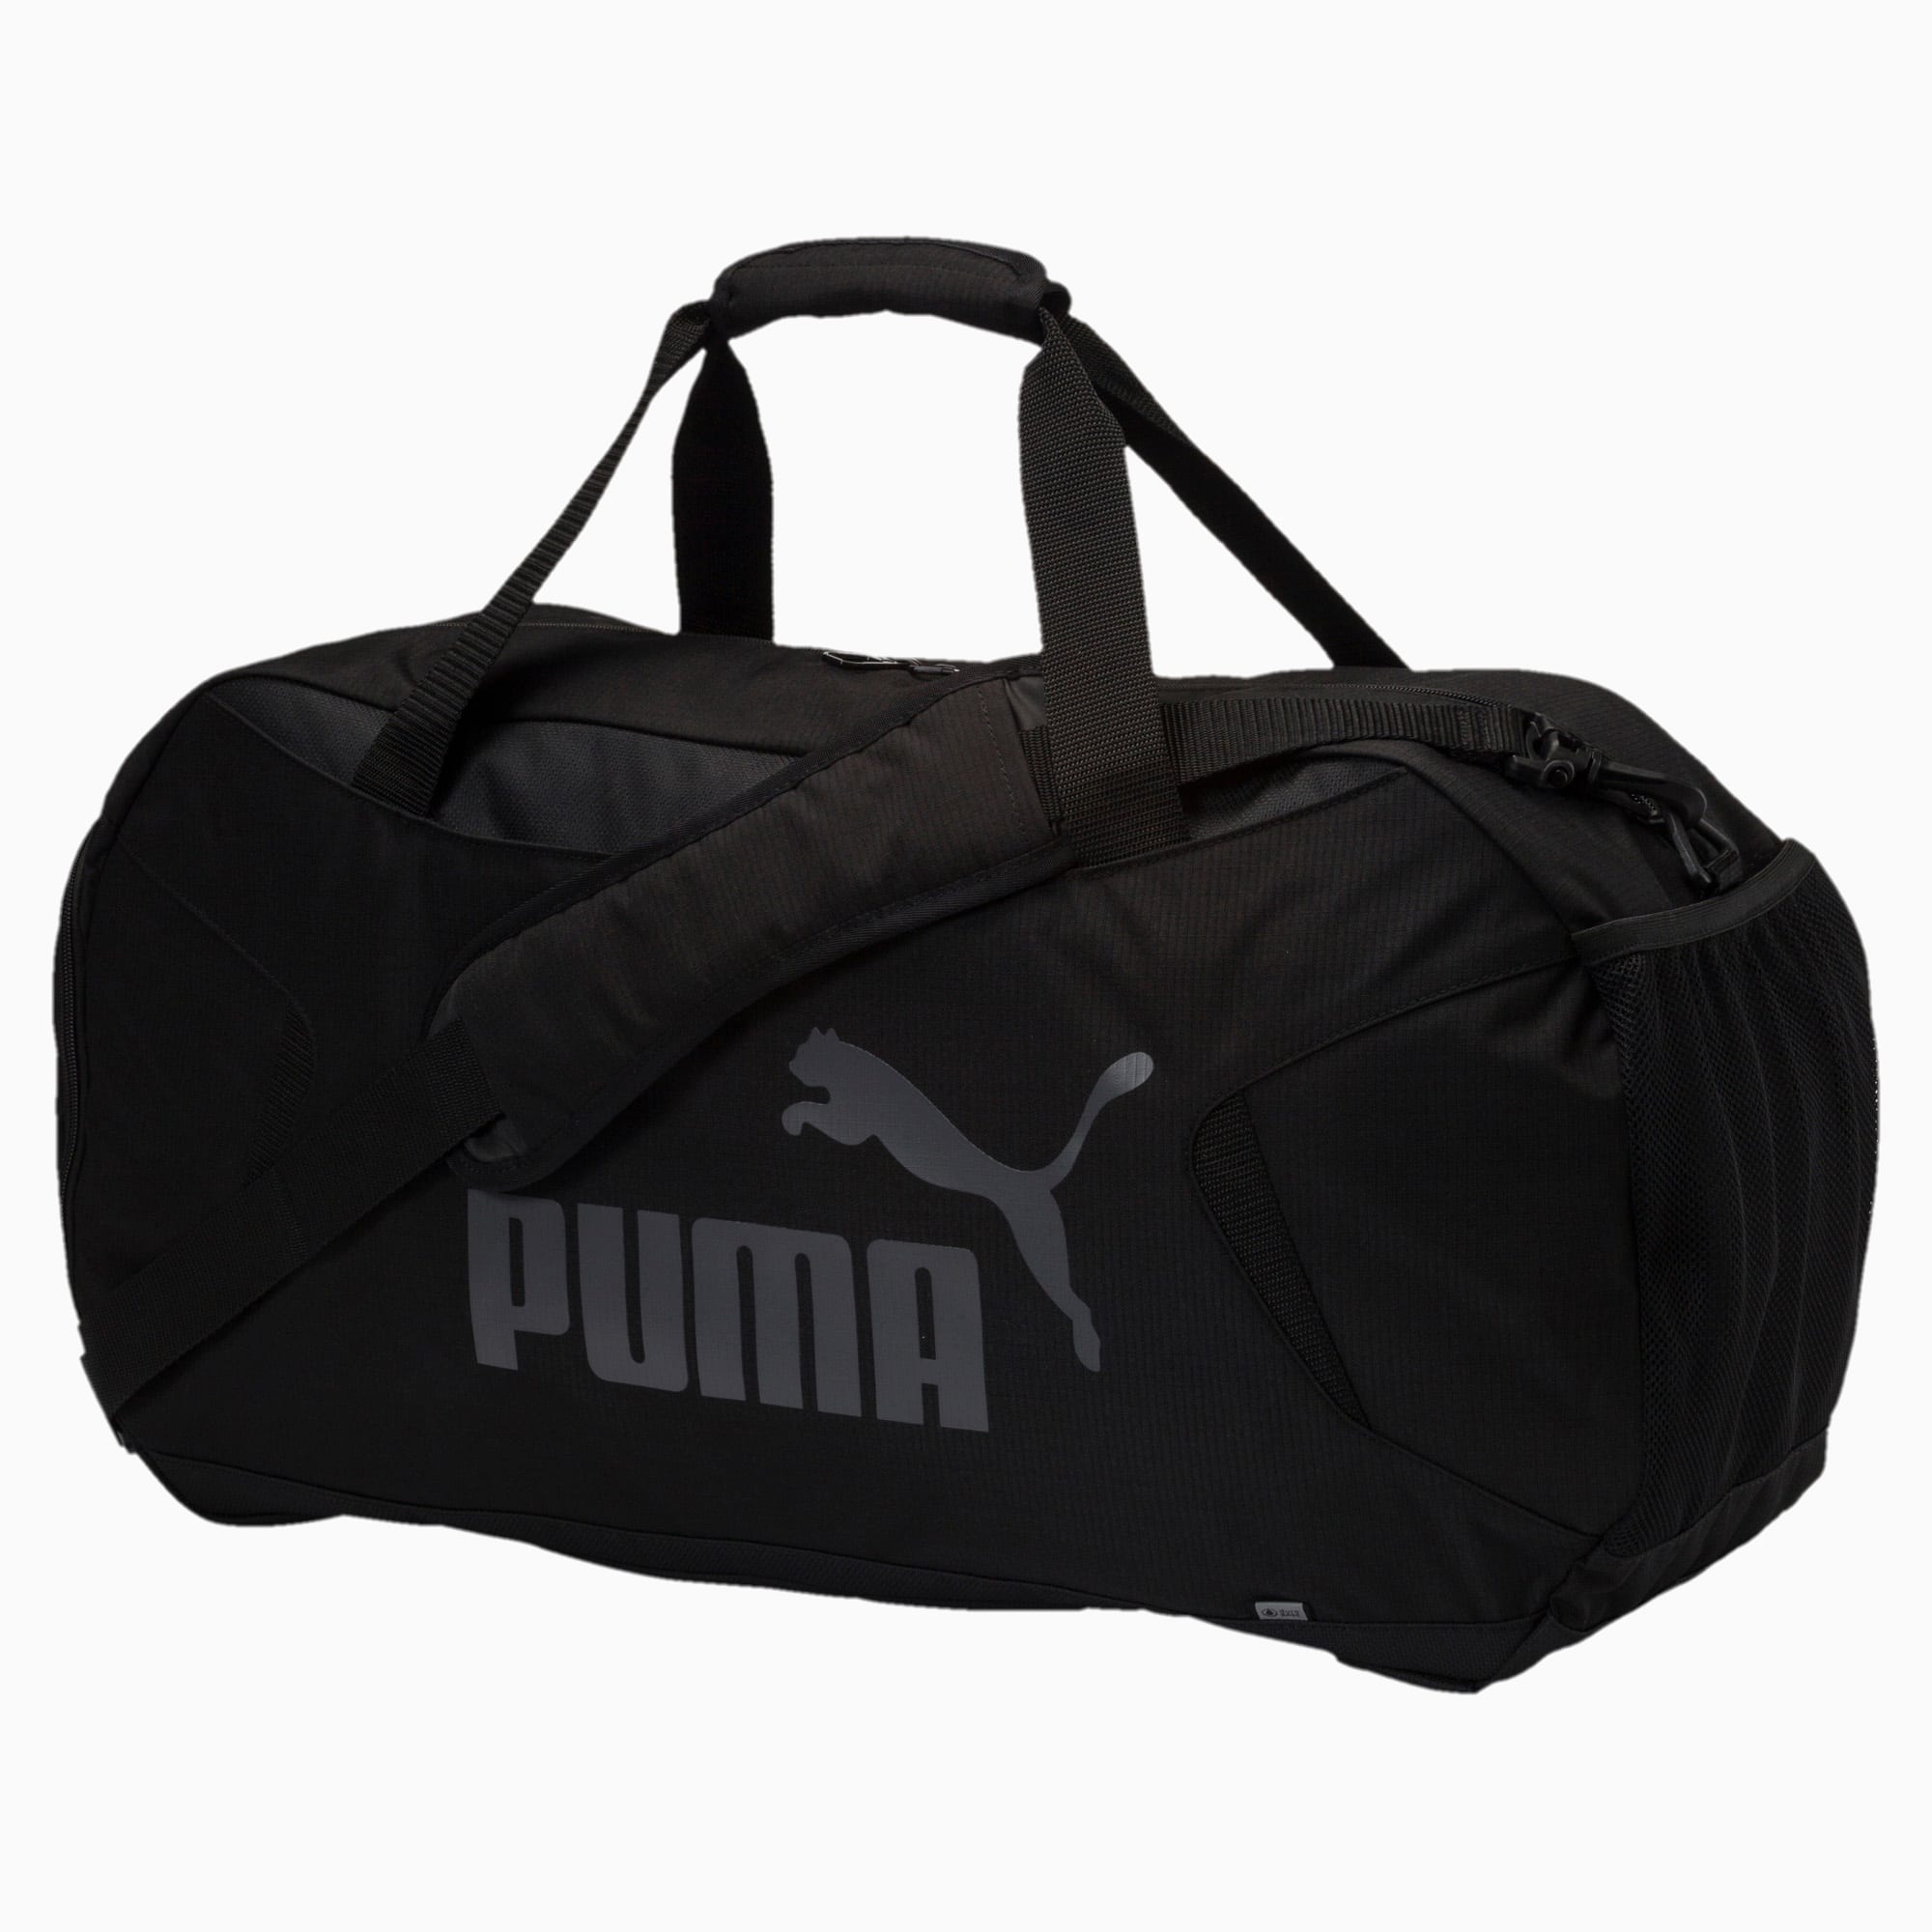 puma black duffle bag